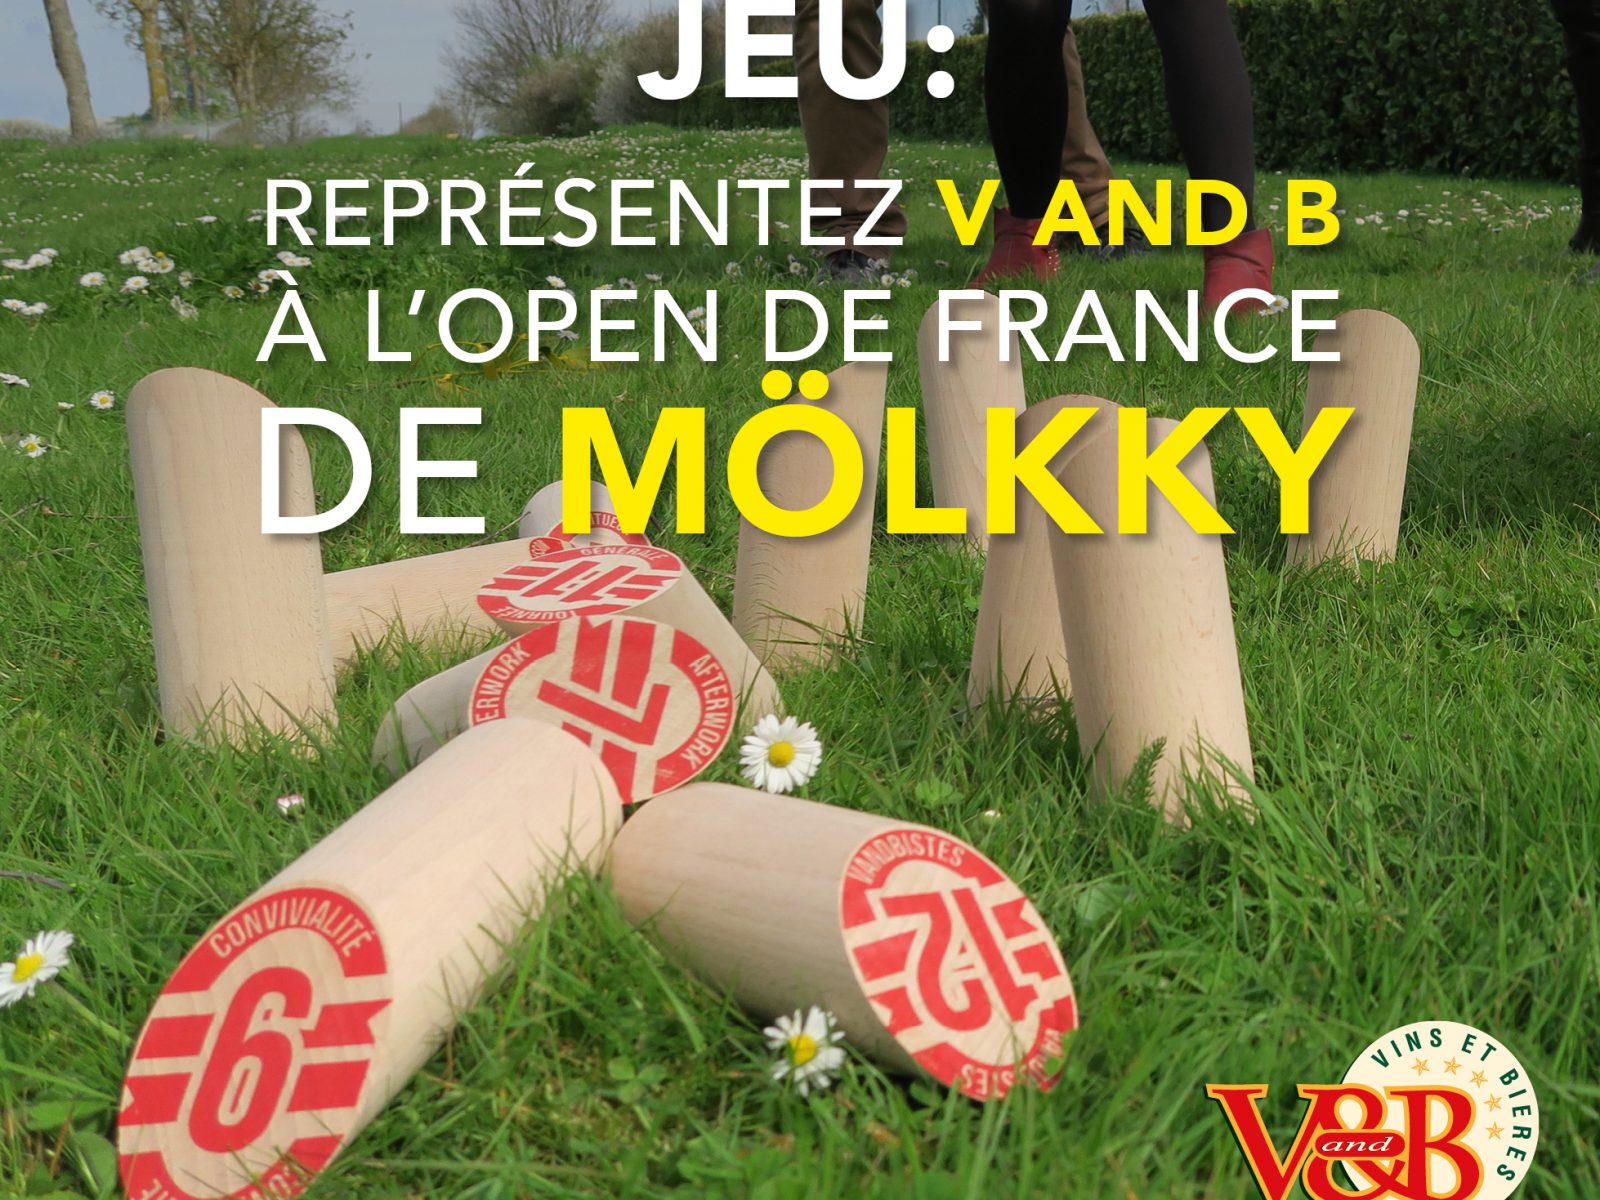 Jeu Mollky V and B